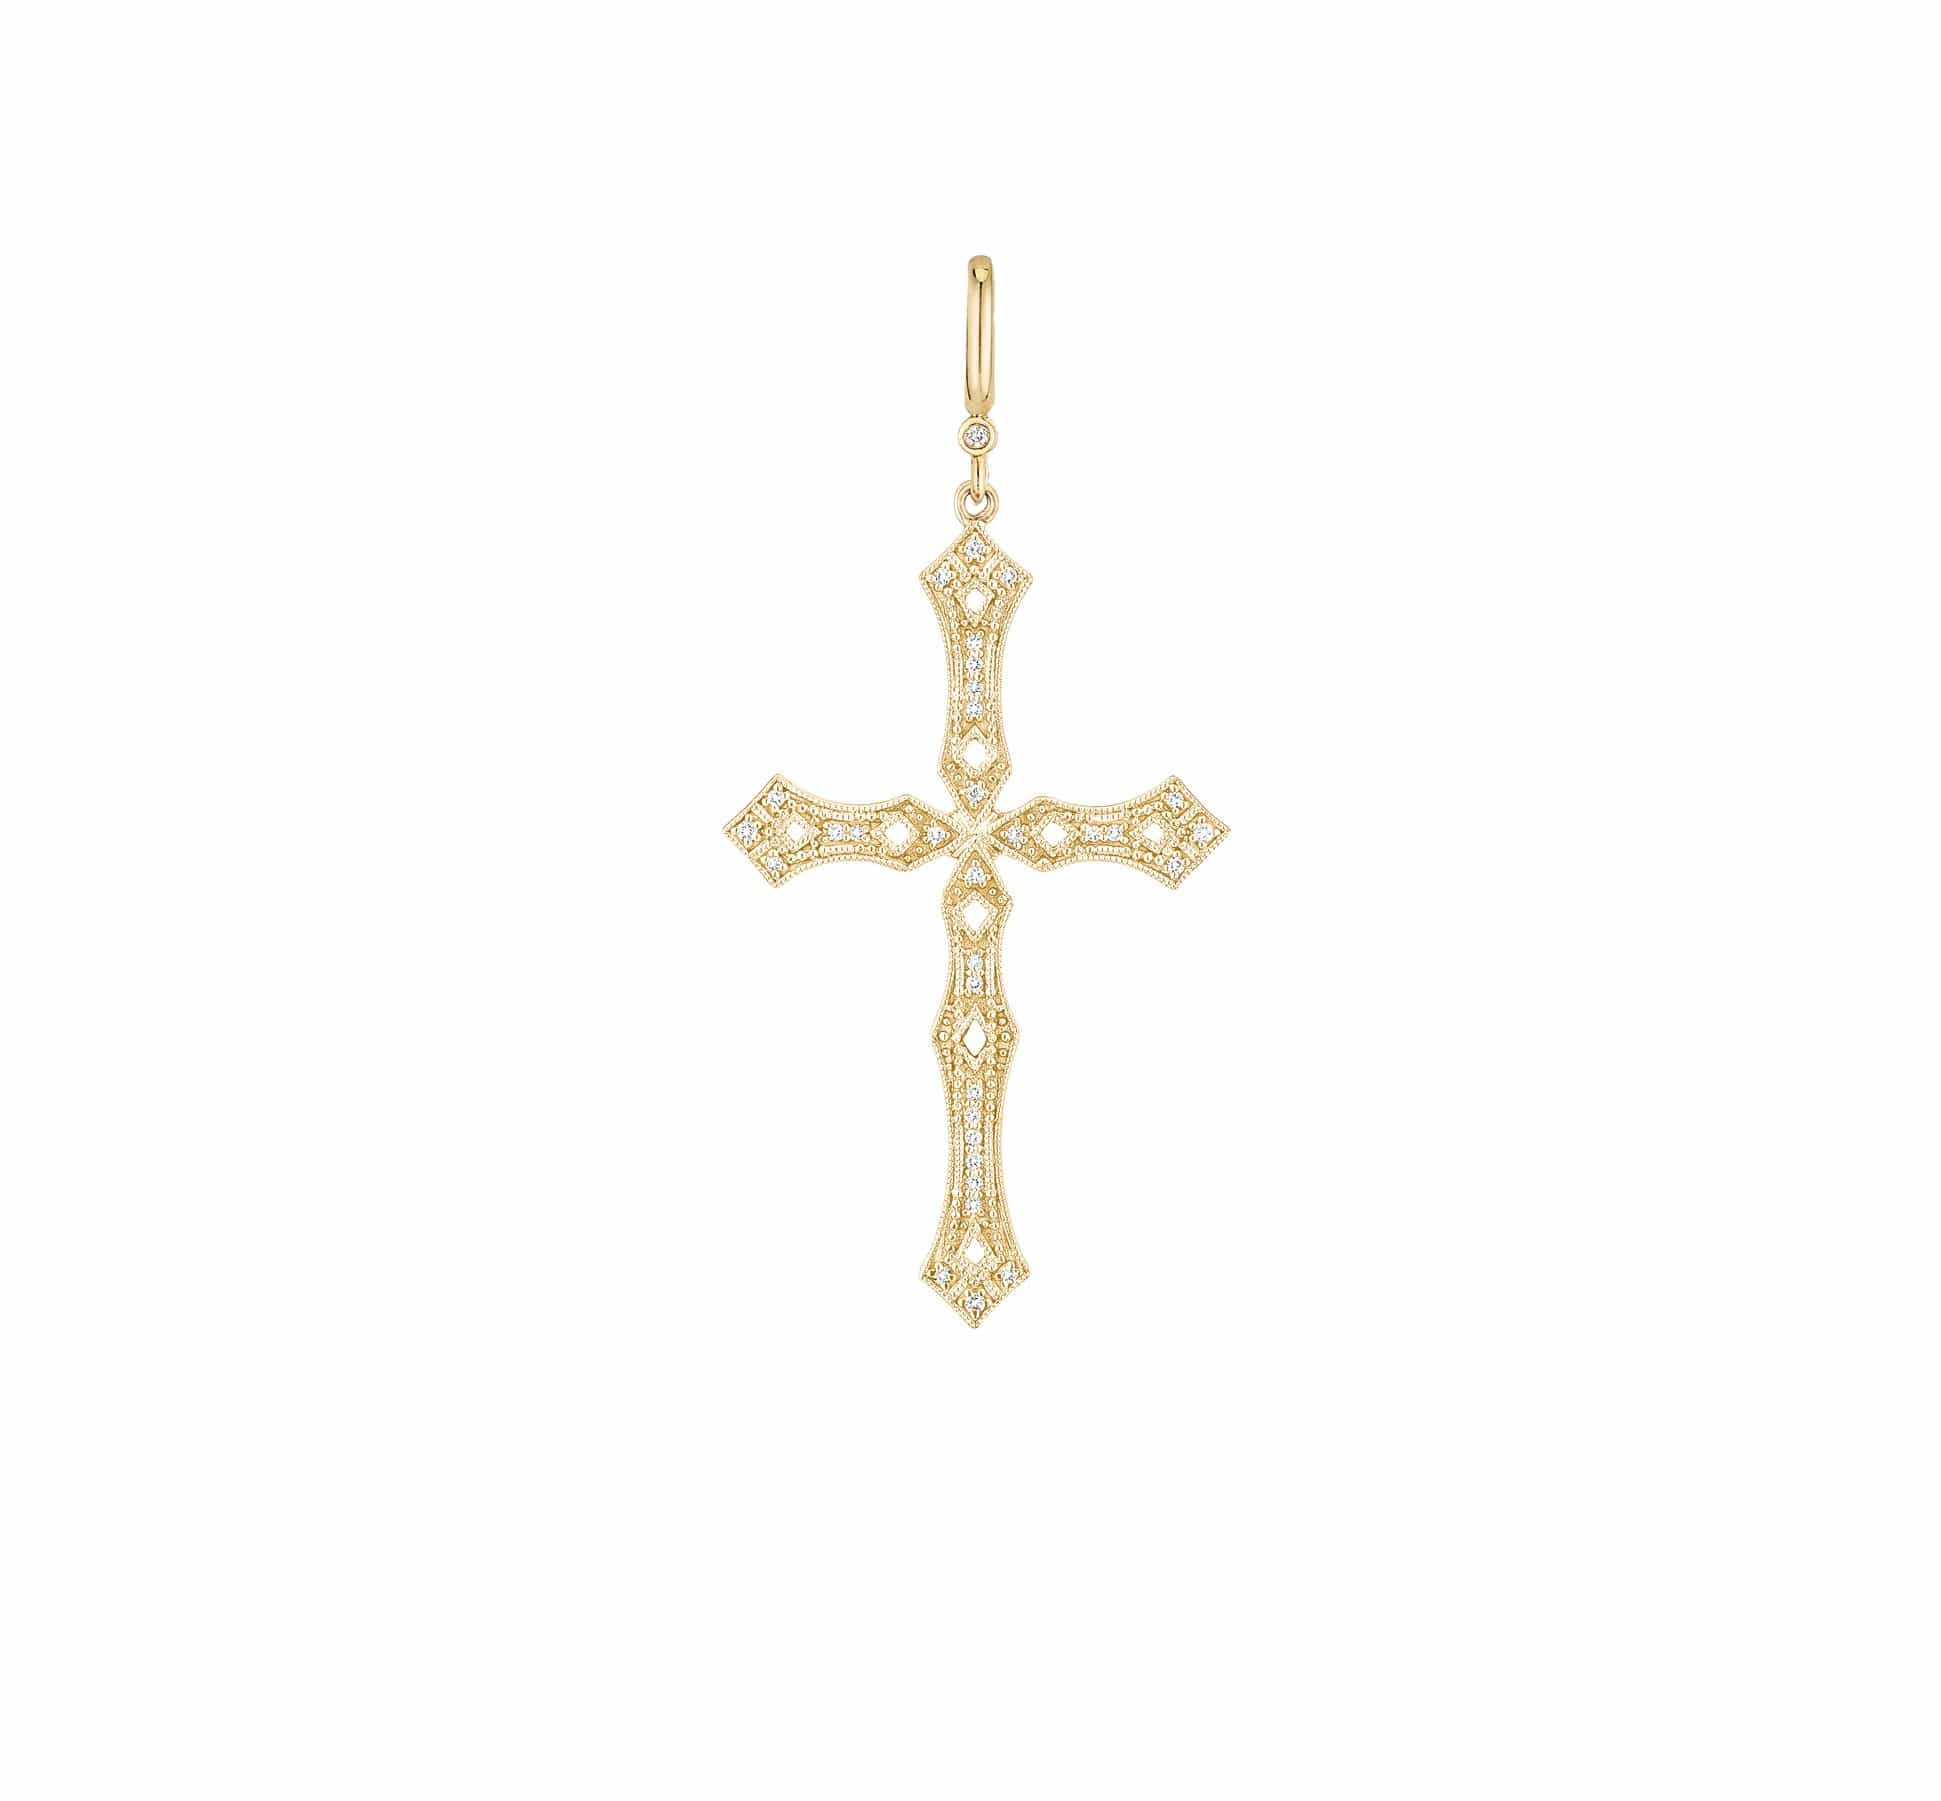 Faith Gold and diamonds small pendant